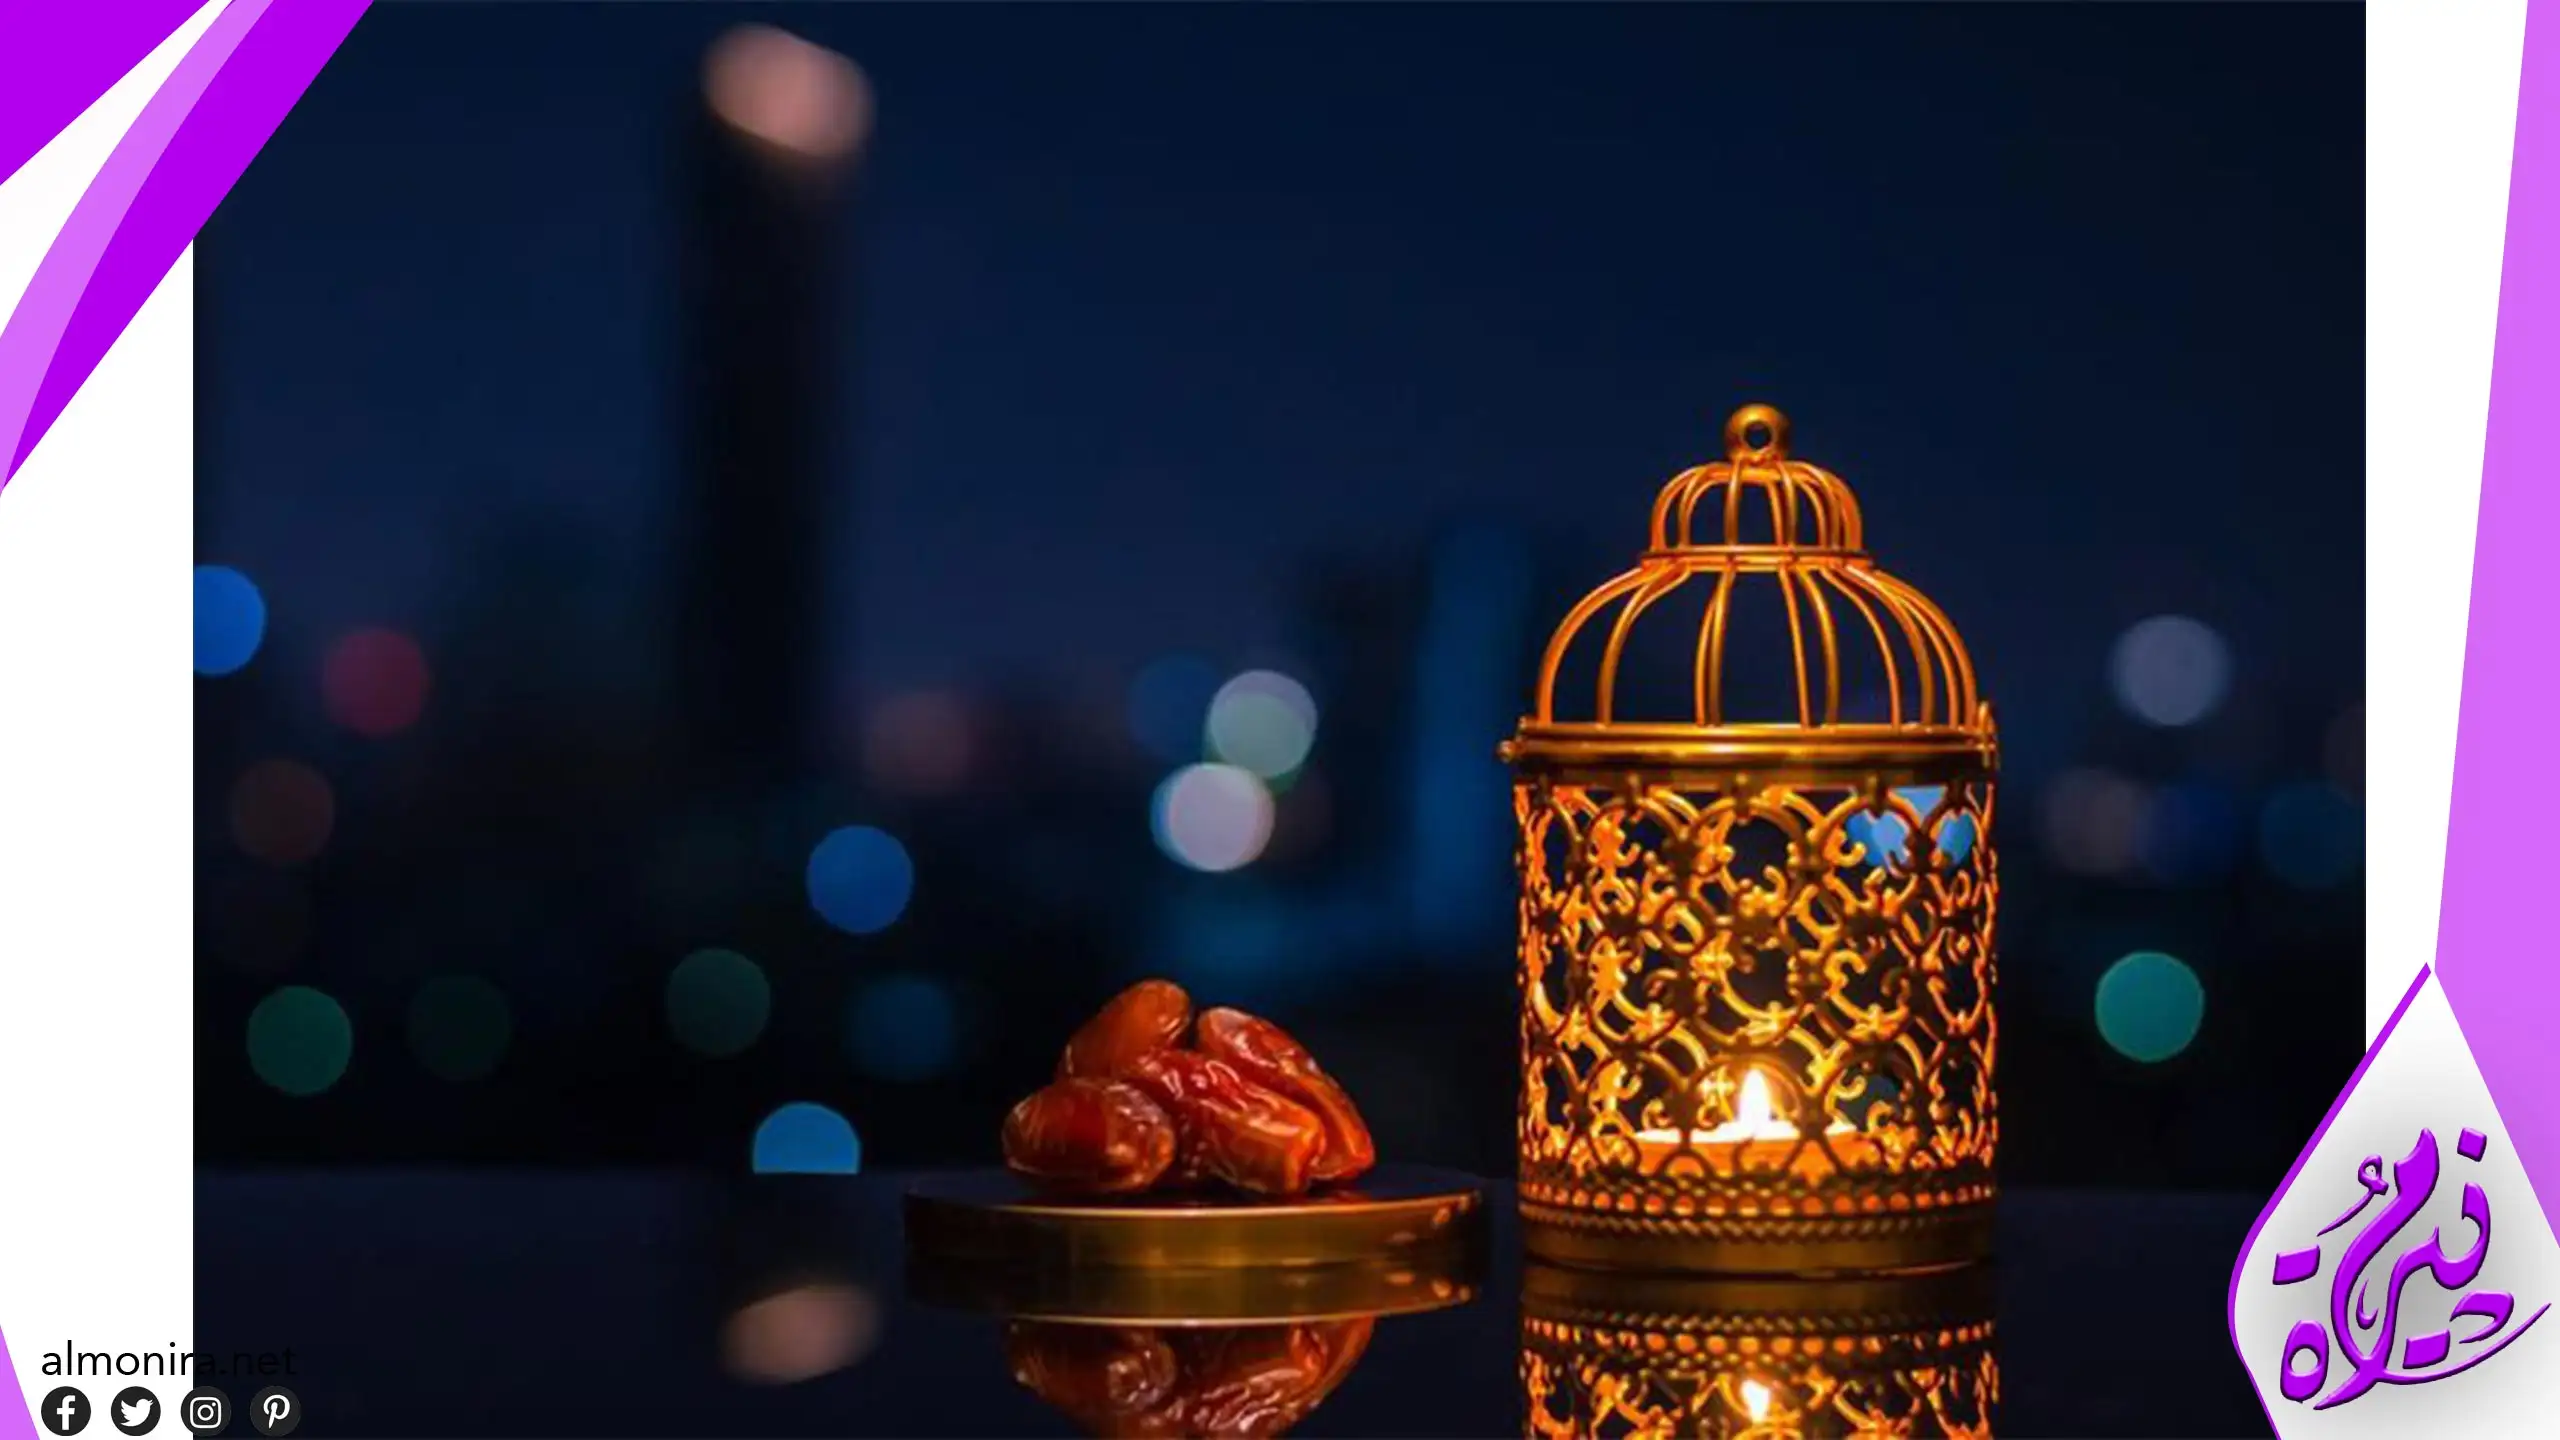 فضائل شهر رمضان أهم 10 منها